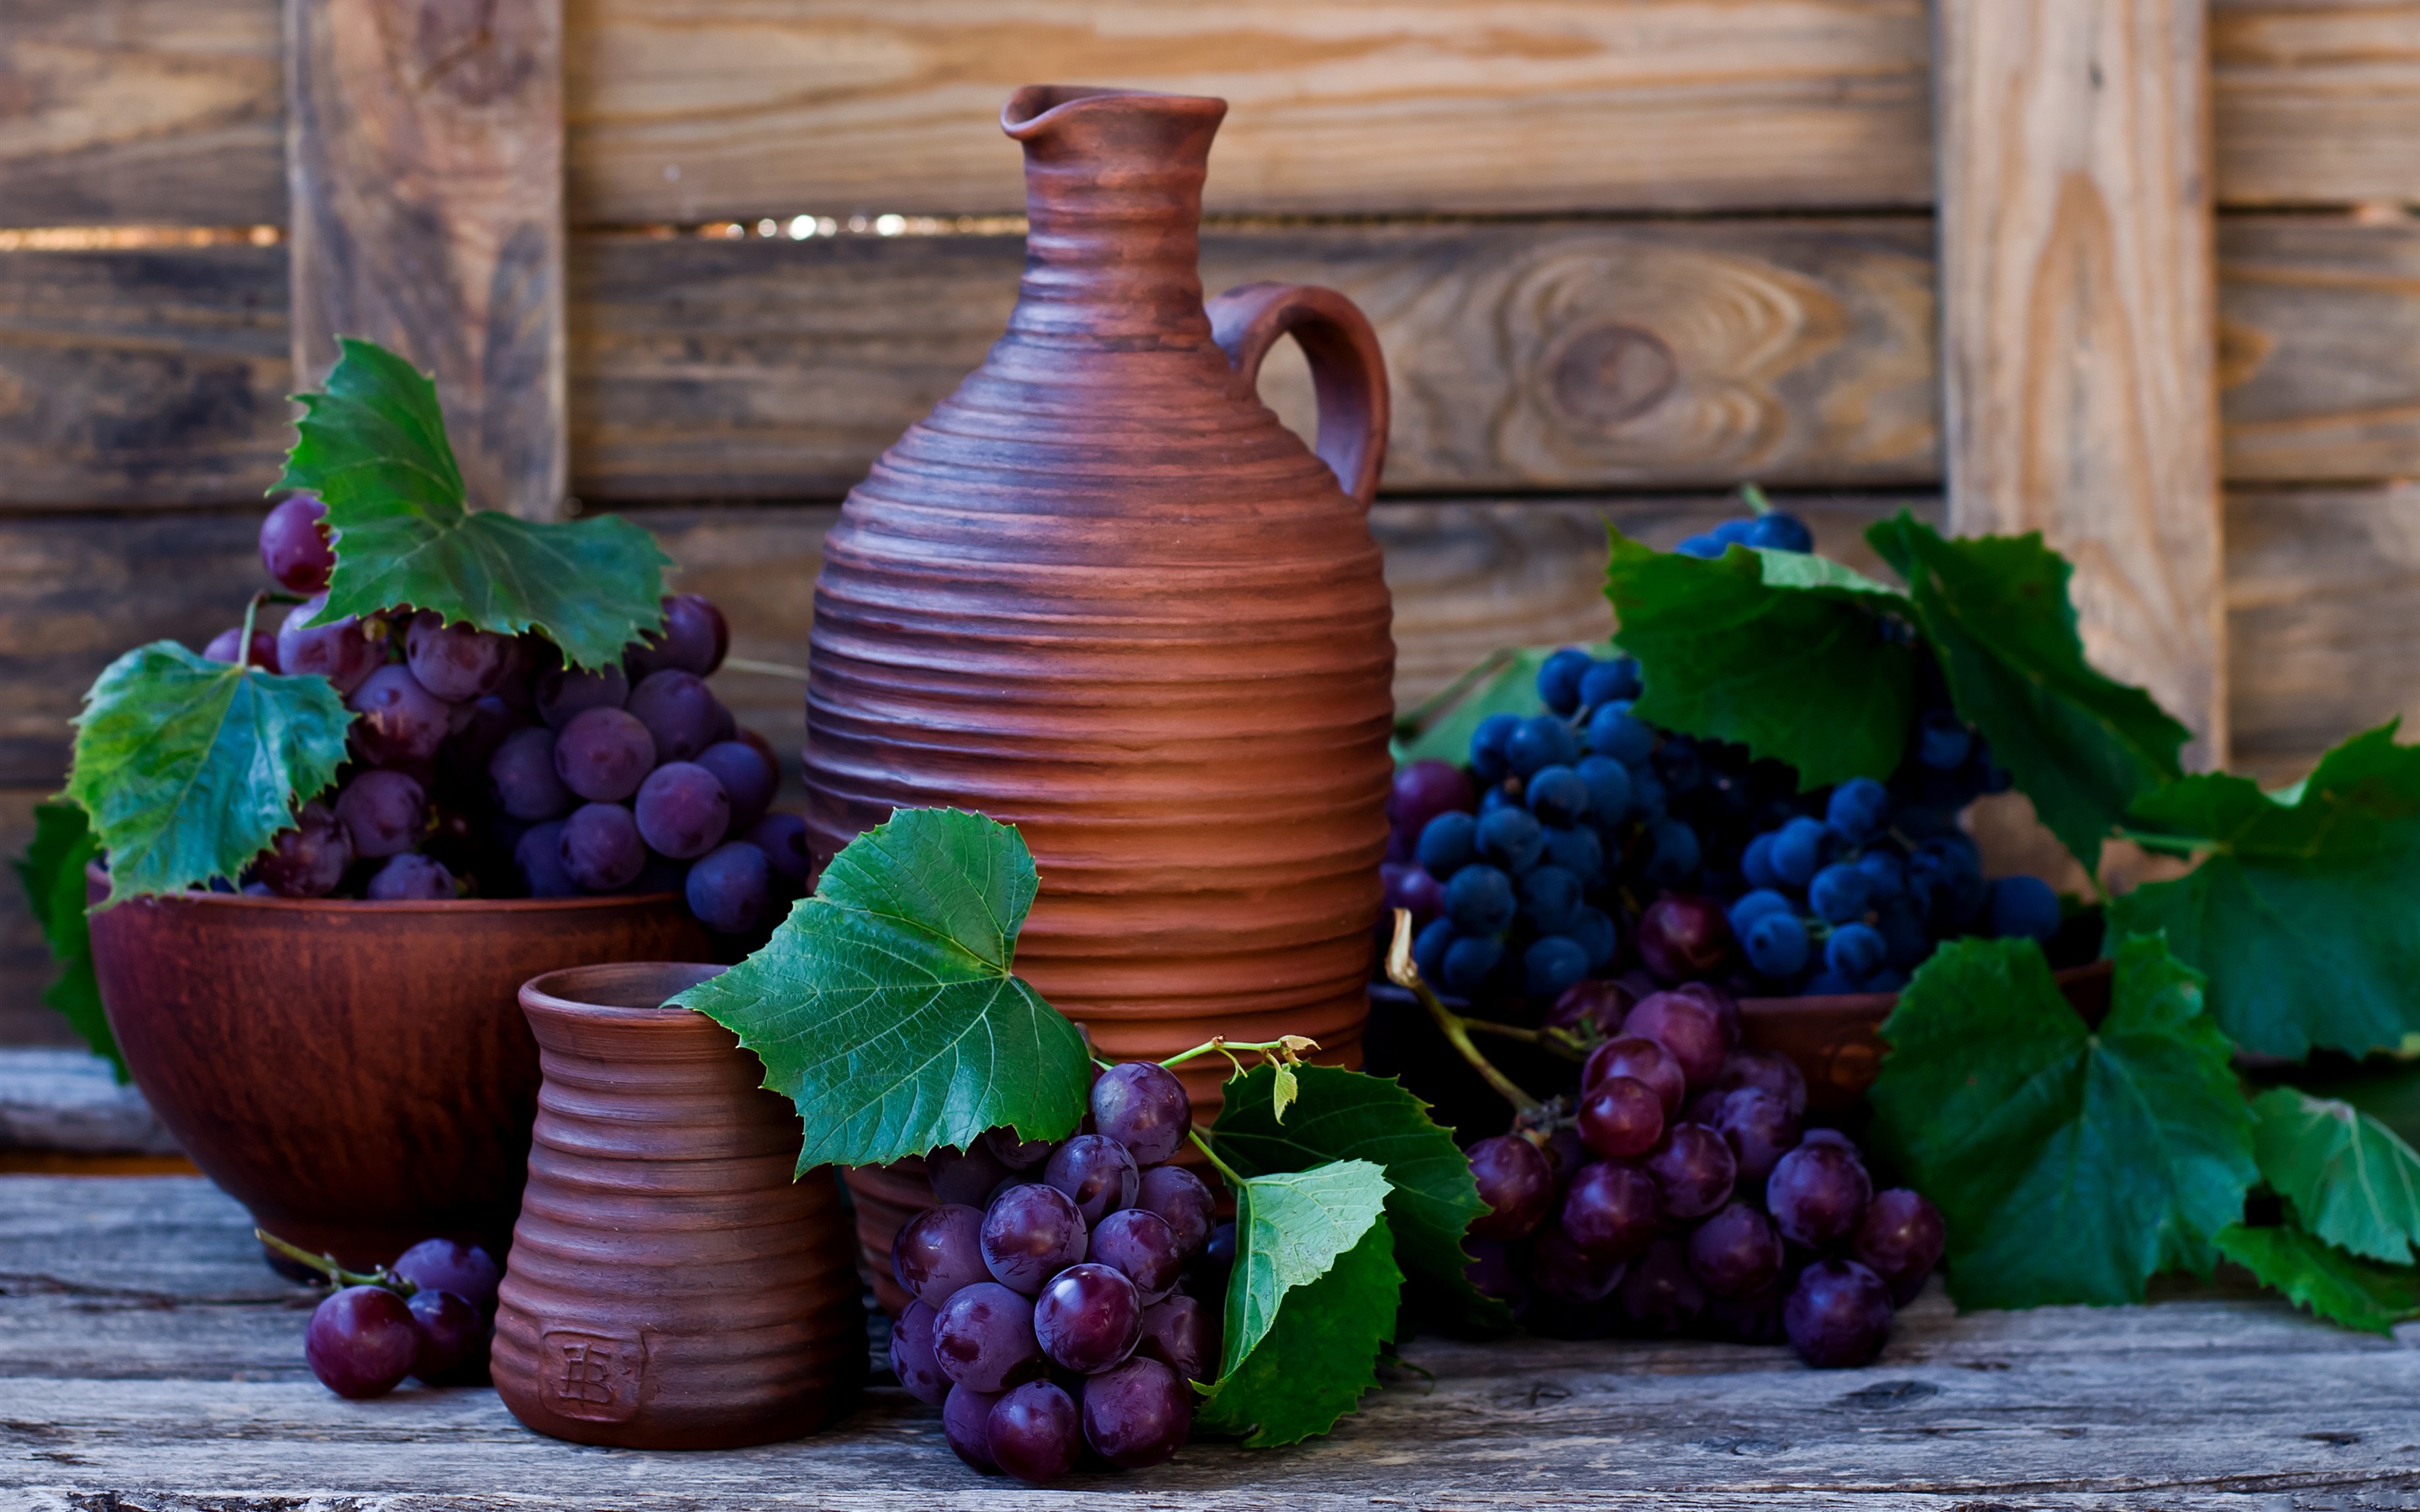 photography, still life, bowl, ceramic, fruit, grapes, purple